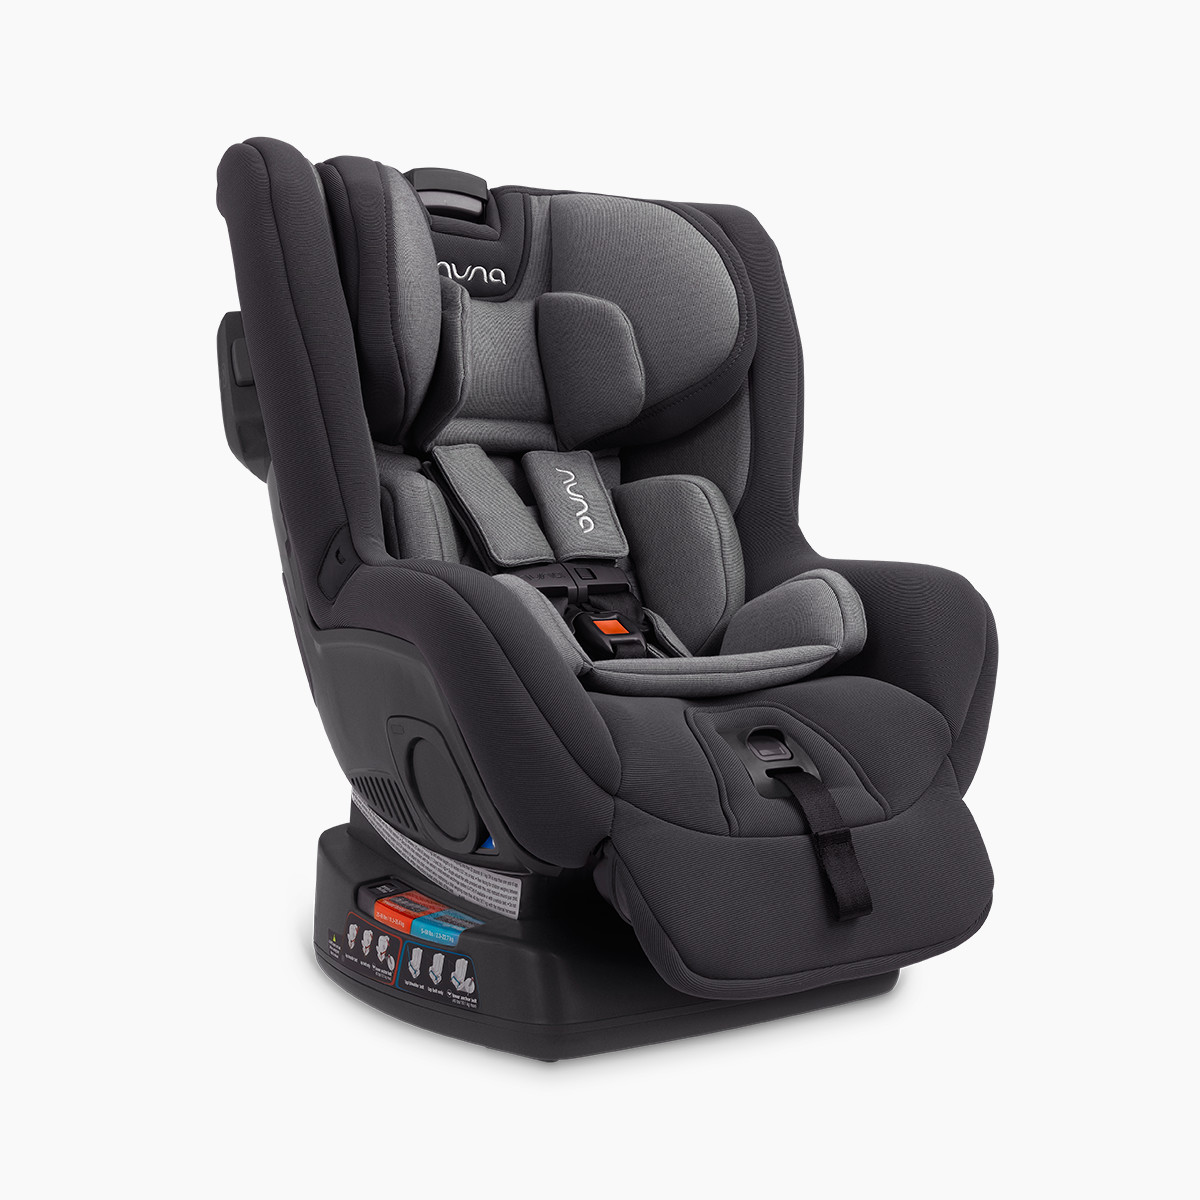 Nuna 2018 RAVA Convertible Car Seat - Slate (2016).